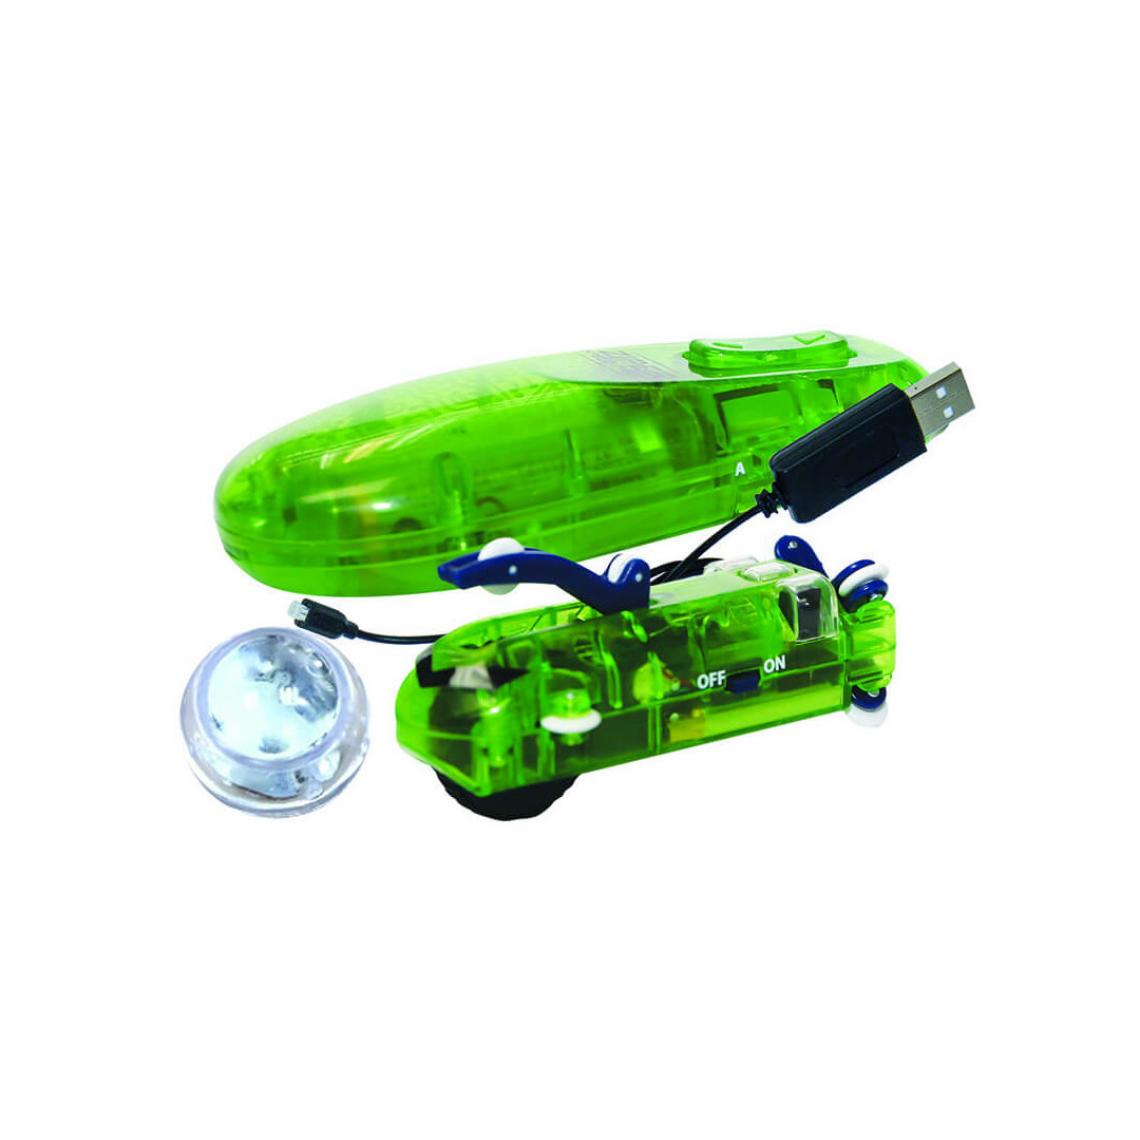 Venteo - Kit accessoire Extra tubes - TELESHOPPING - Bleu / Vert - Enfants - Circuit Magic Flash Tubes - Kit d'expériences